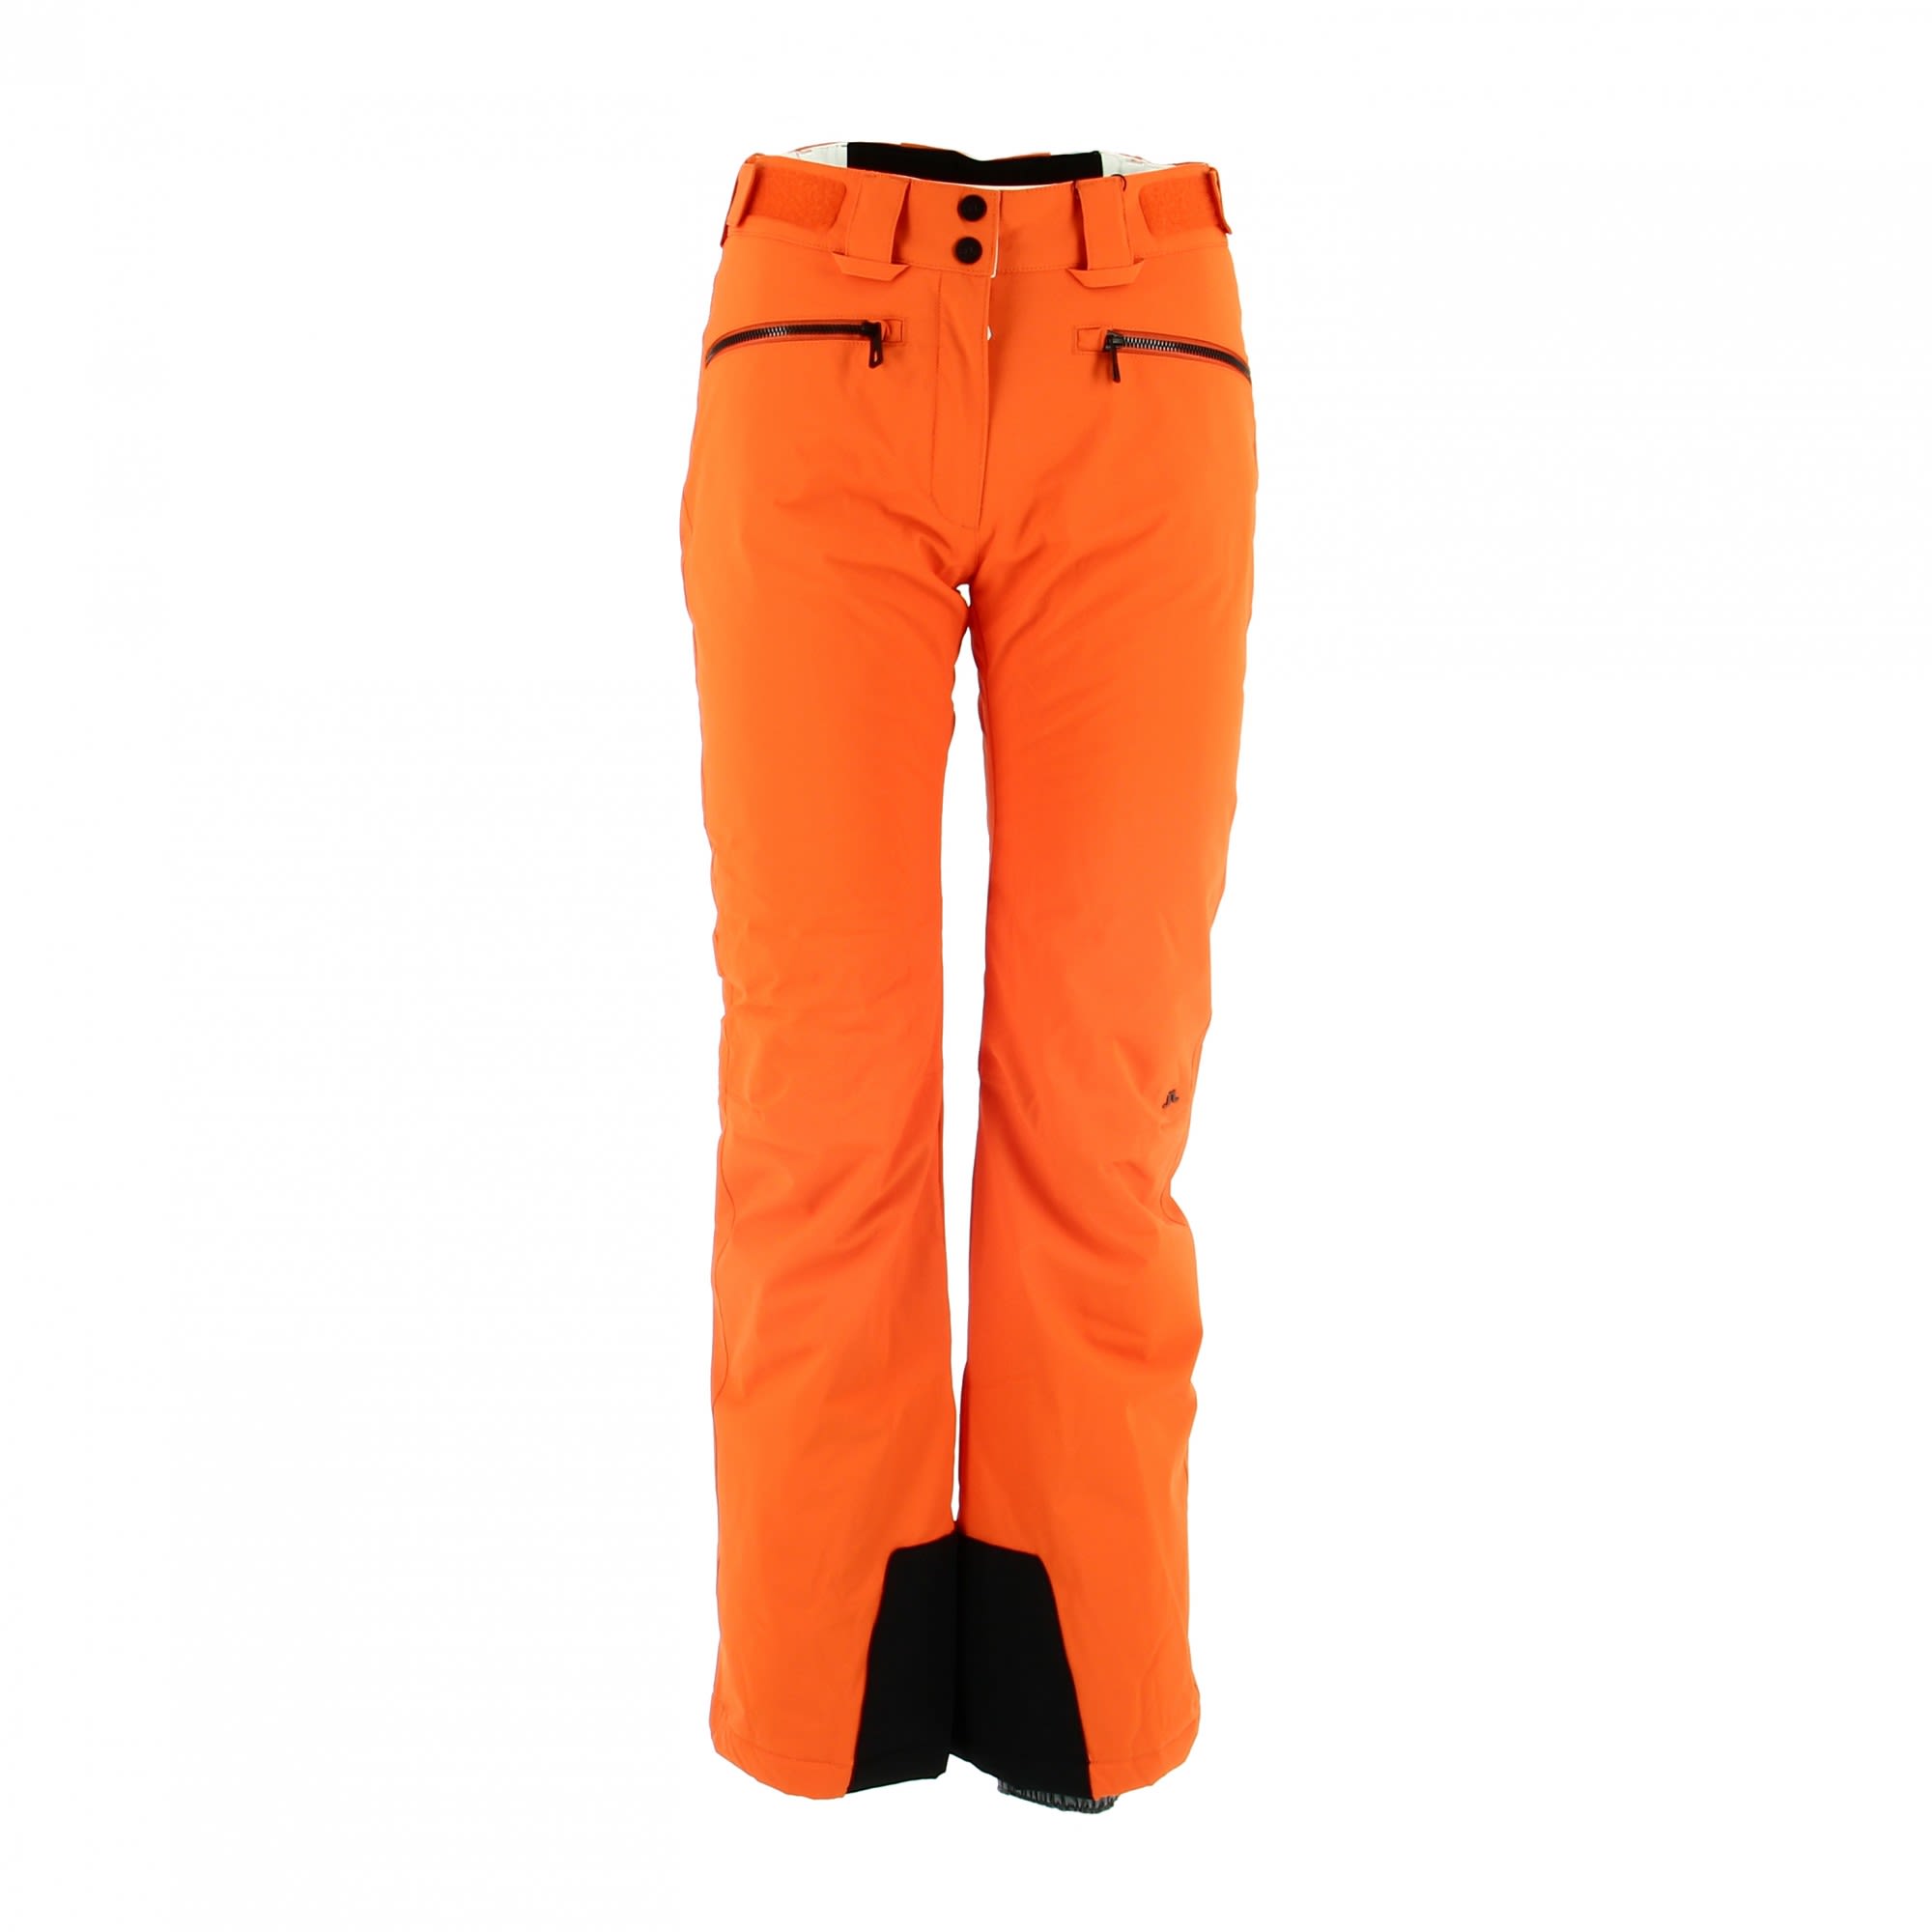 J-Lindeberg Truuli Pants Orange- Female PrimaLoft(R) Softshellhosen- Grsse XS - Farbe Juicy Orange